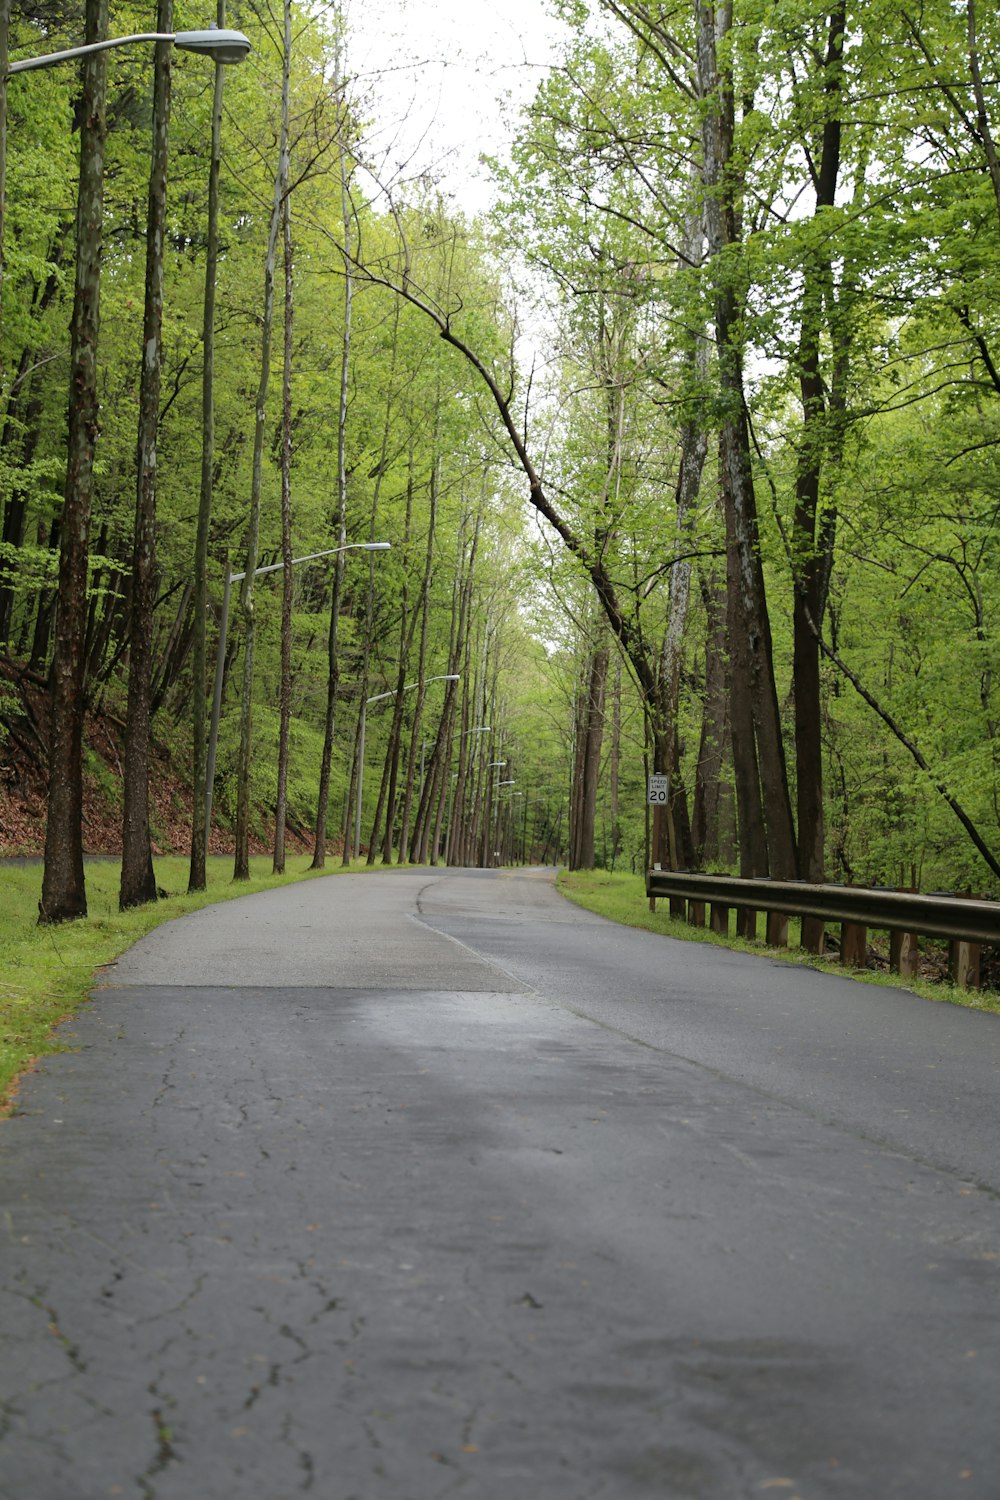 Un camino pavimentado en medio de un bosque